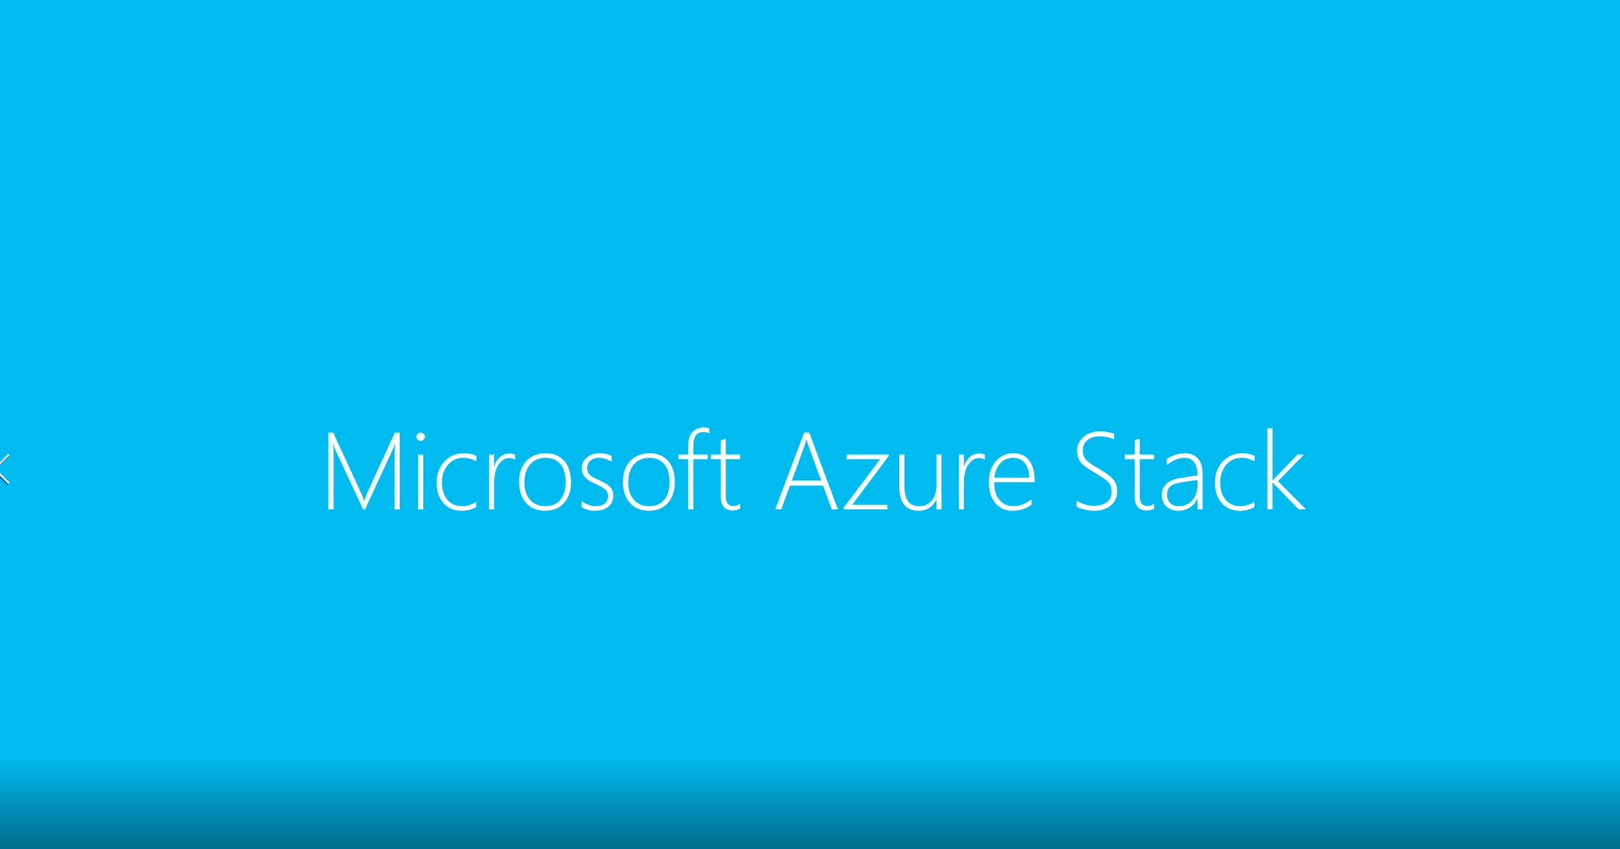 Microsoft Azure Stack Logo - Benefits of Azure Stack